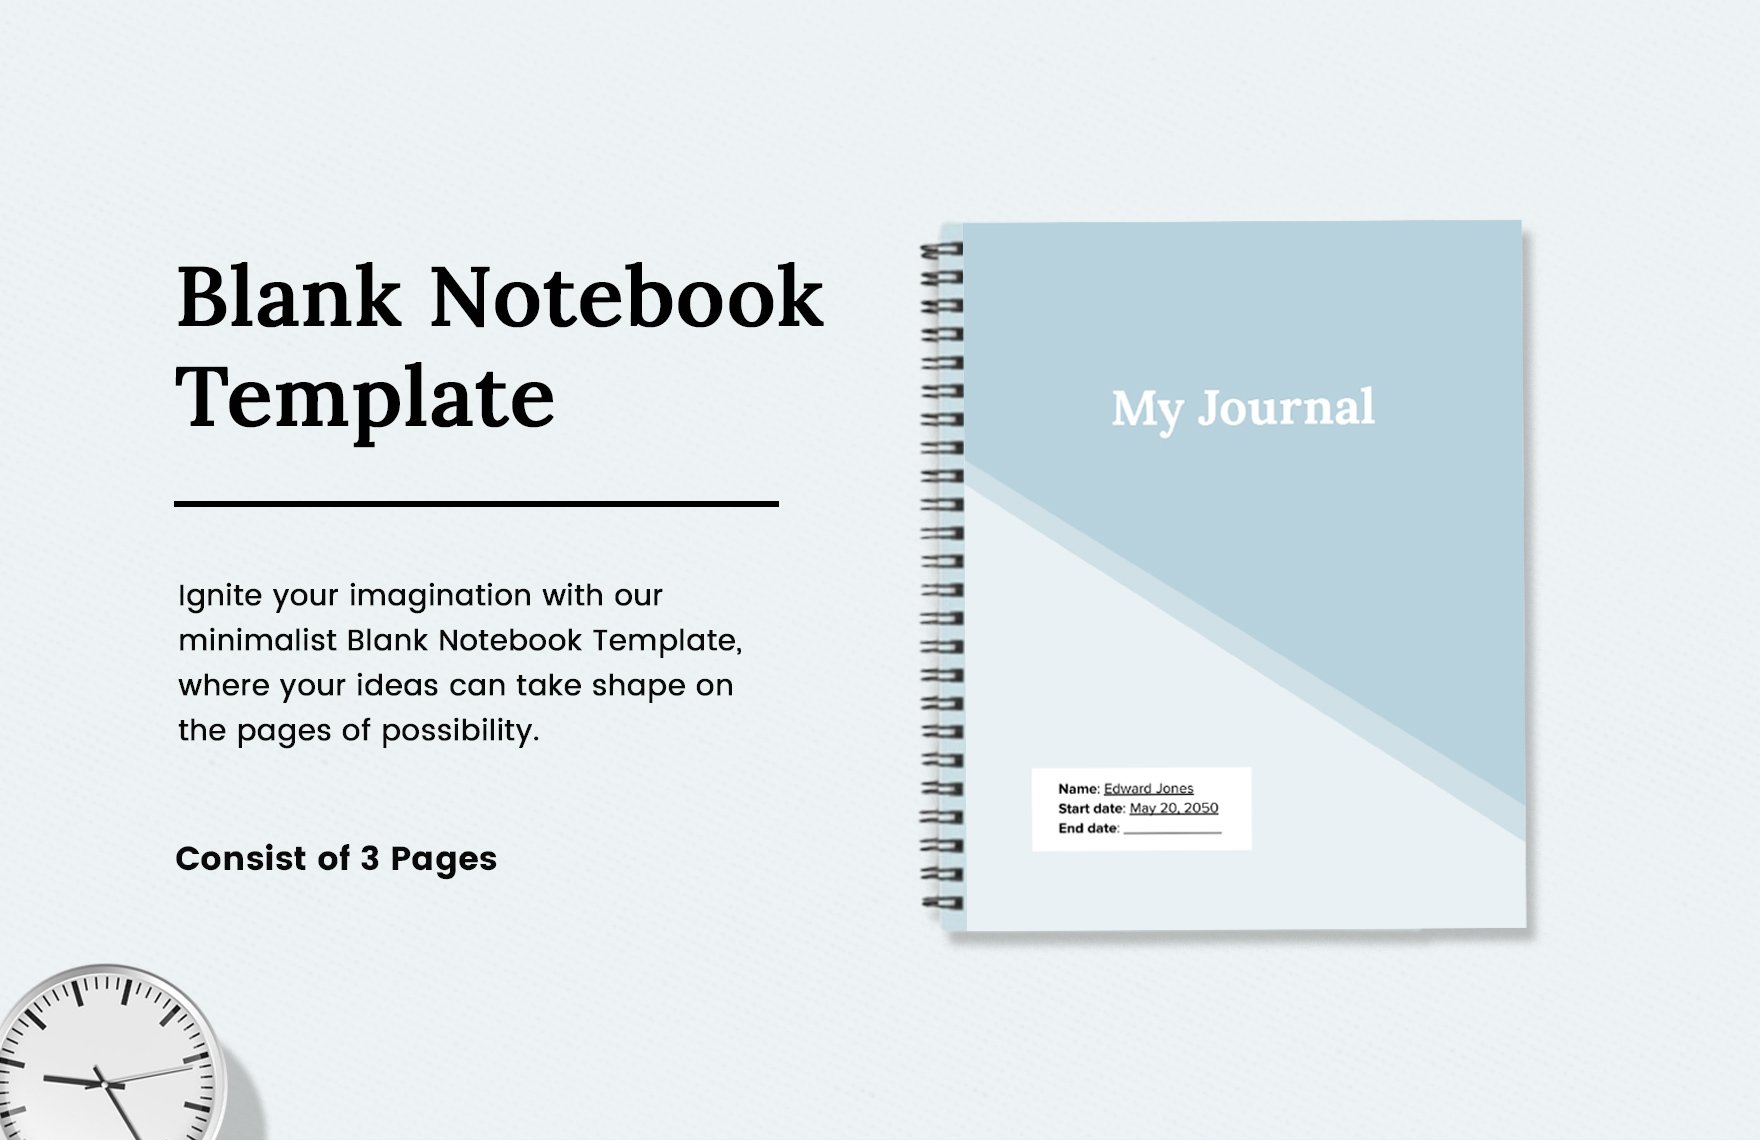 Blank Notebook Template